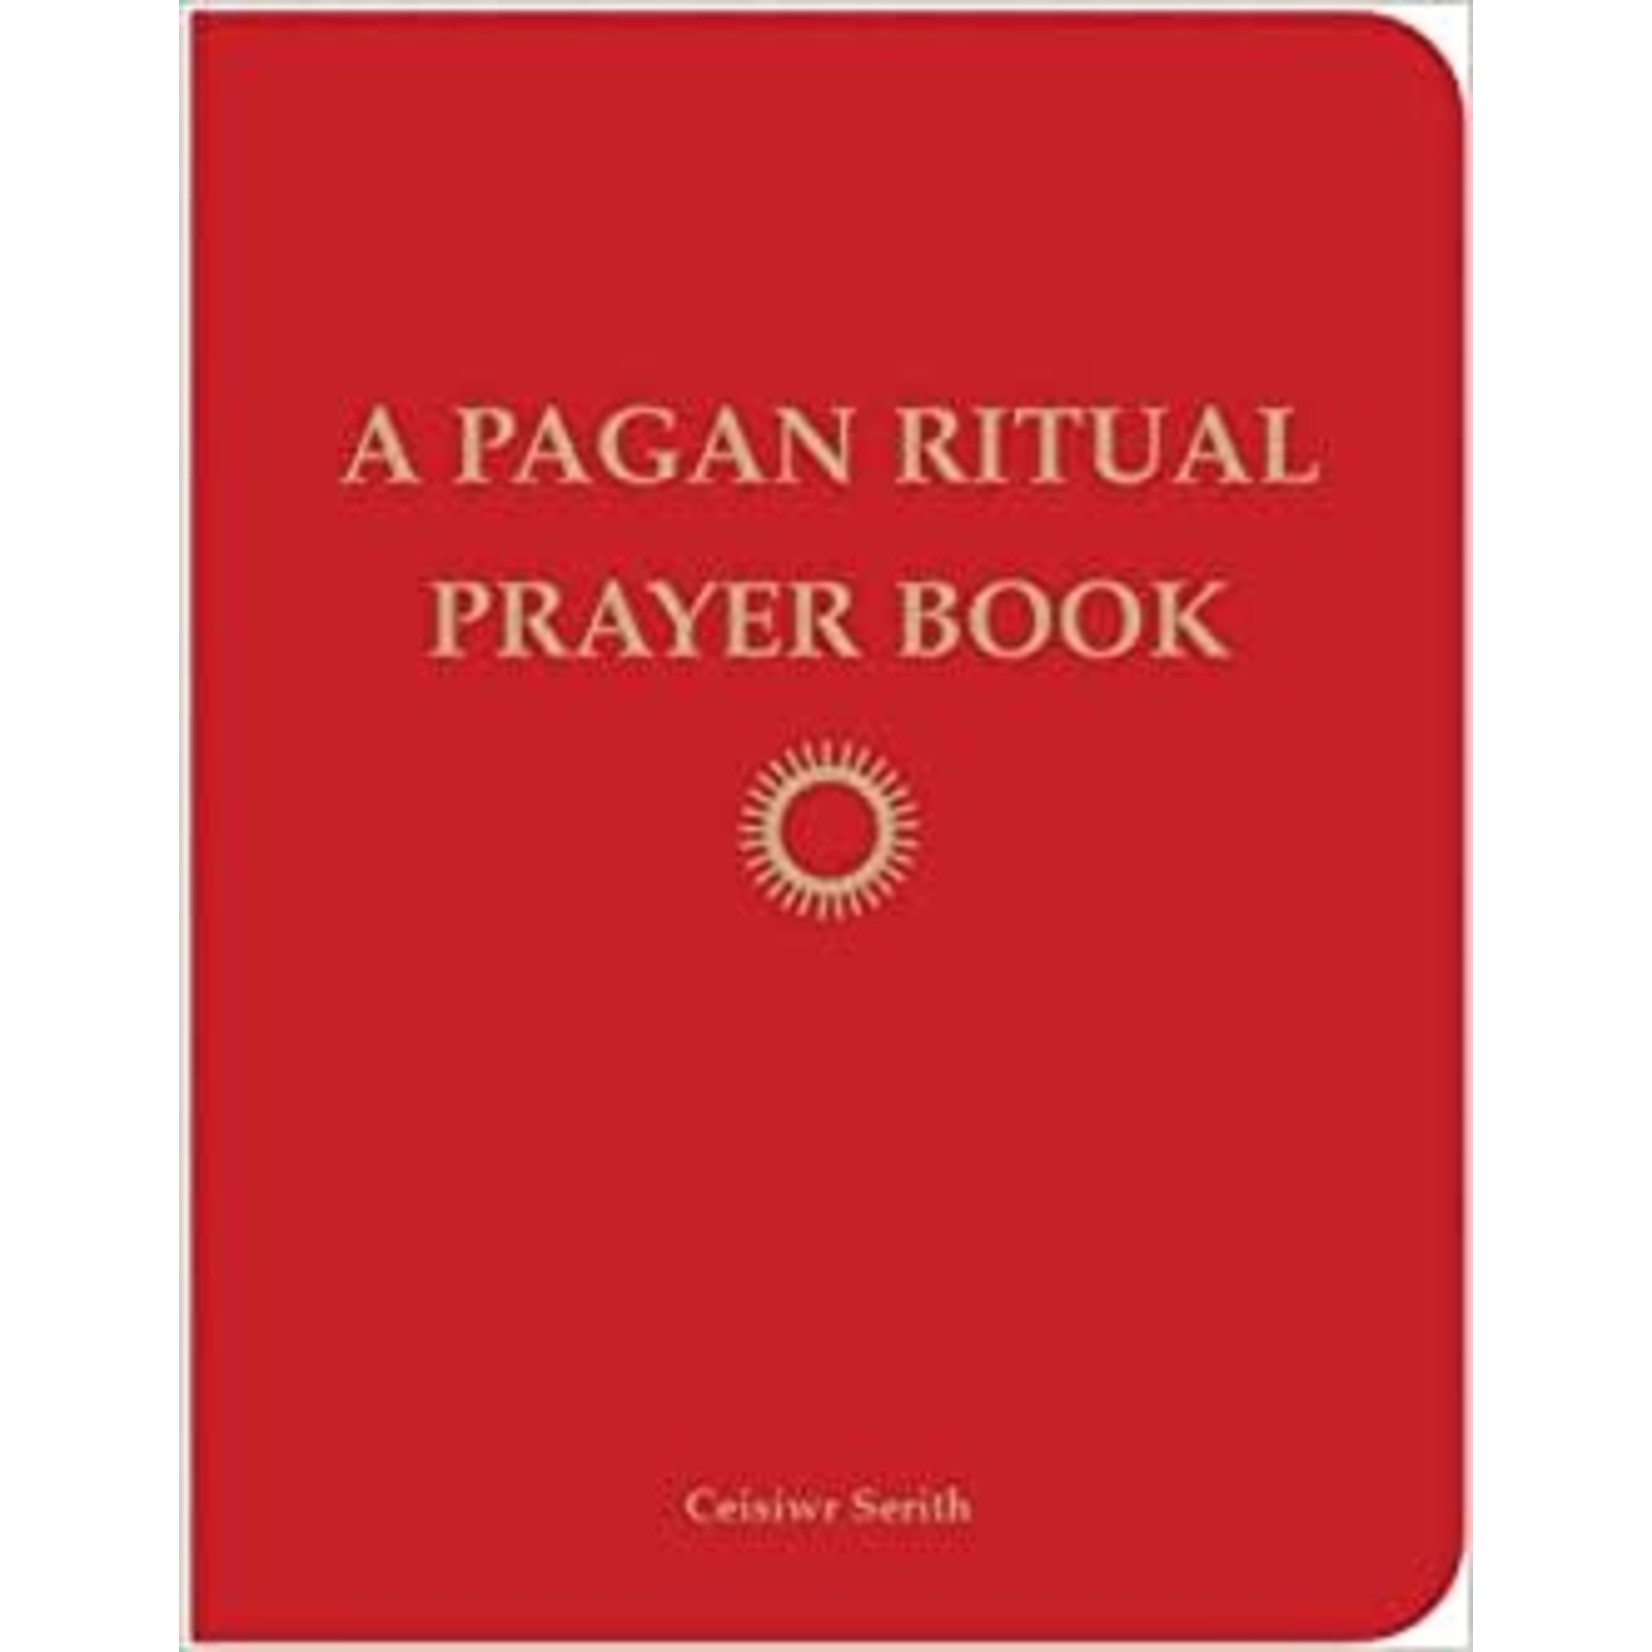 A Pagan Ritual Prayer Book by Ceisiwr Serith